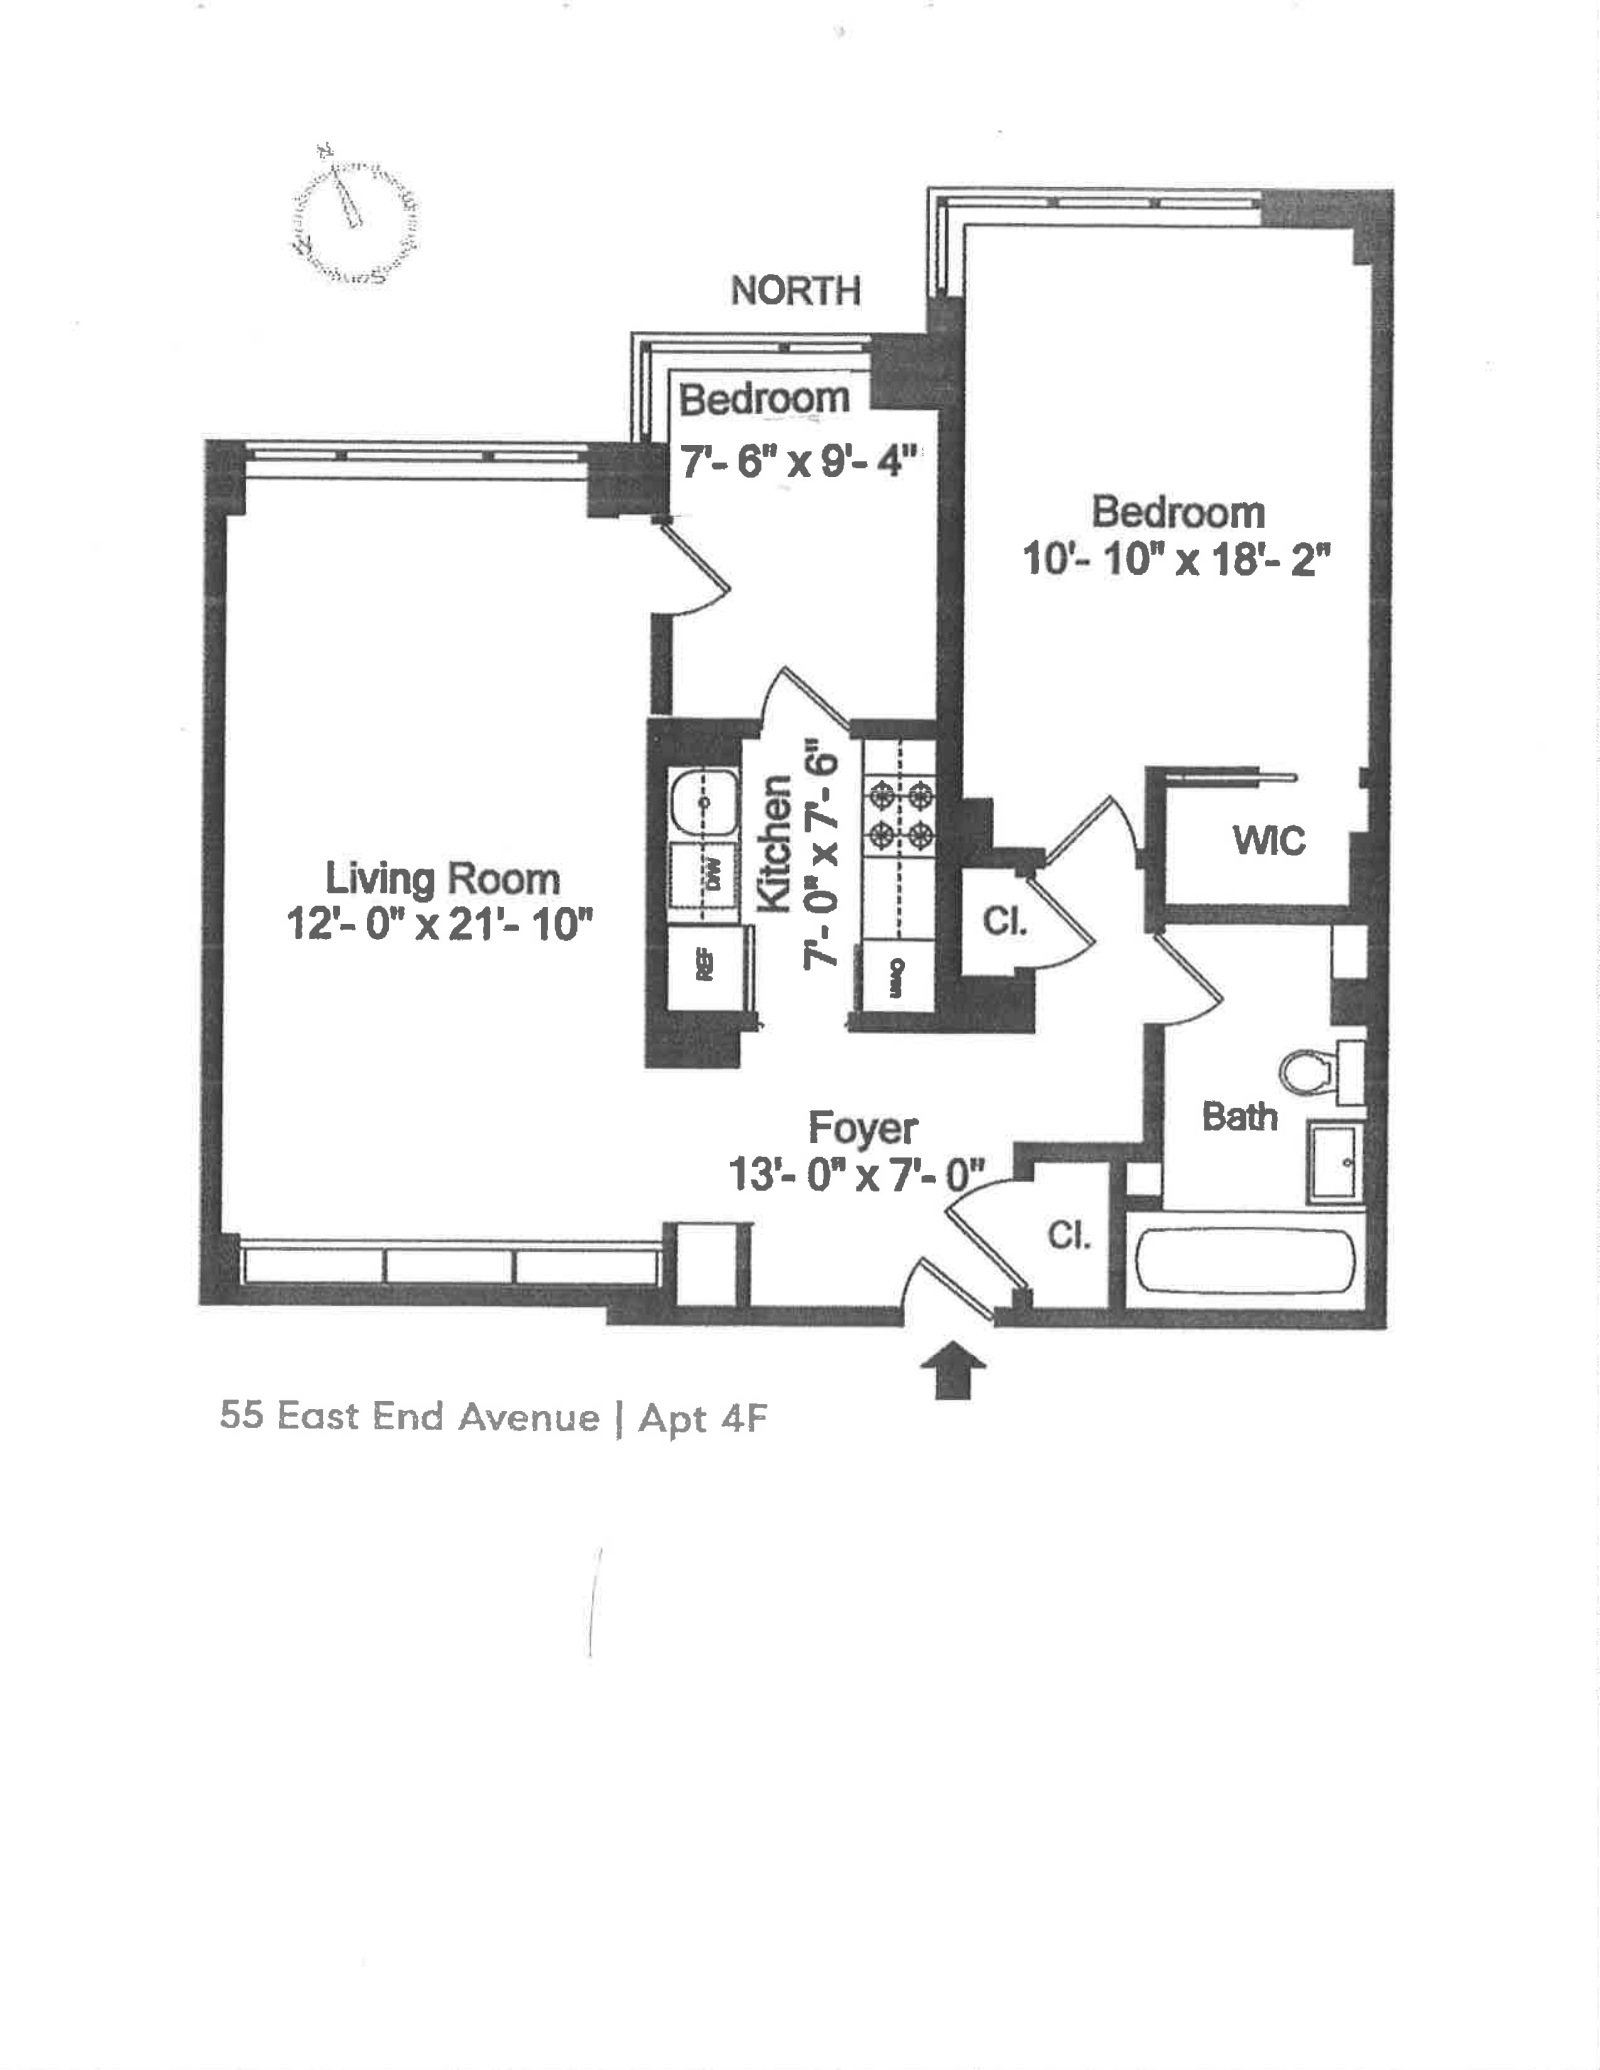 Floorplan for 55 East End Avenue, 4F